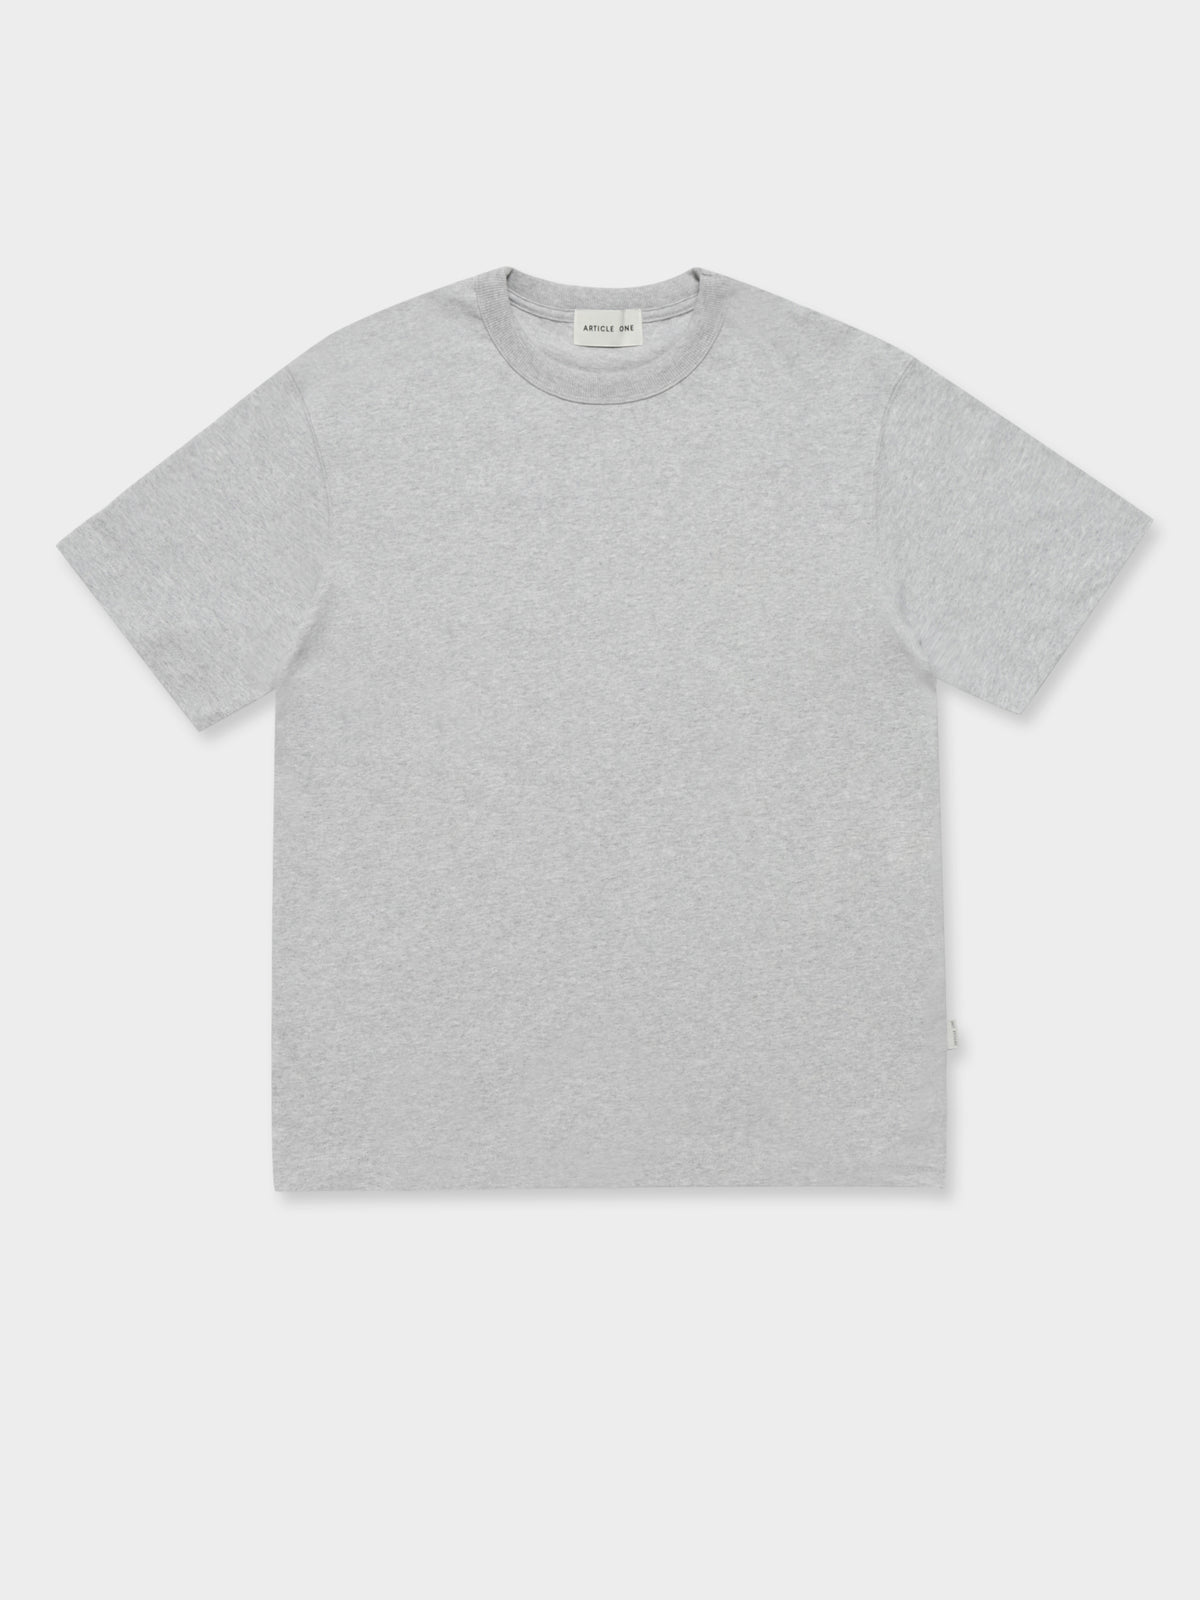 Heavyweight Crew T-Shirt in Grey Marle